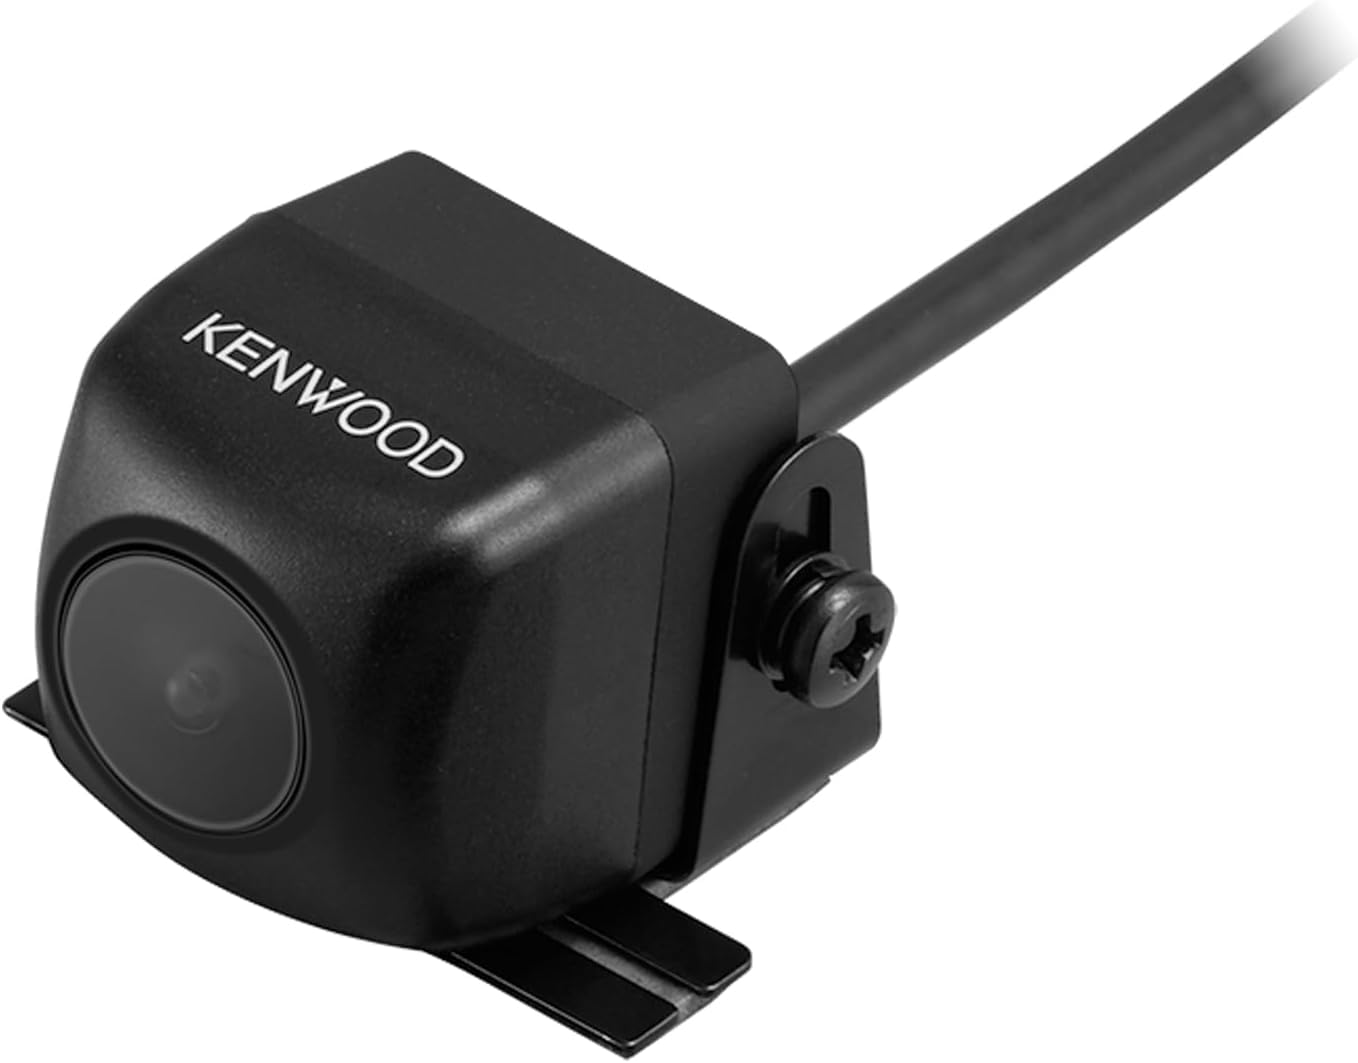 Kenwood DMX1057XR 10.1" Wireless Apple CarPlay Android Auto Car Stereo + CMOS-230LP Camera